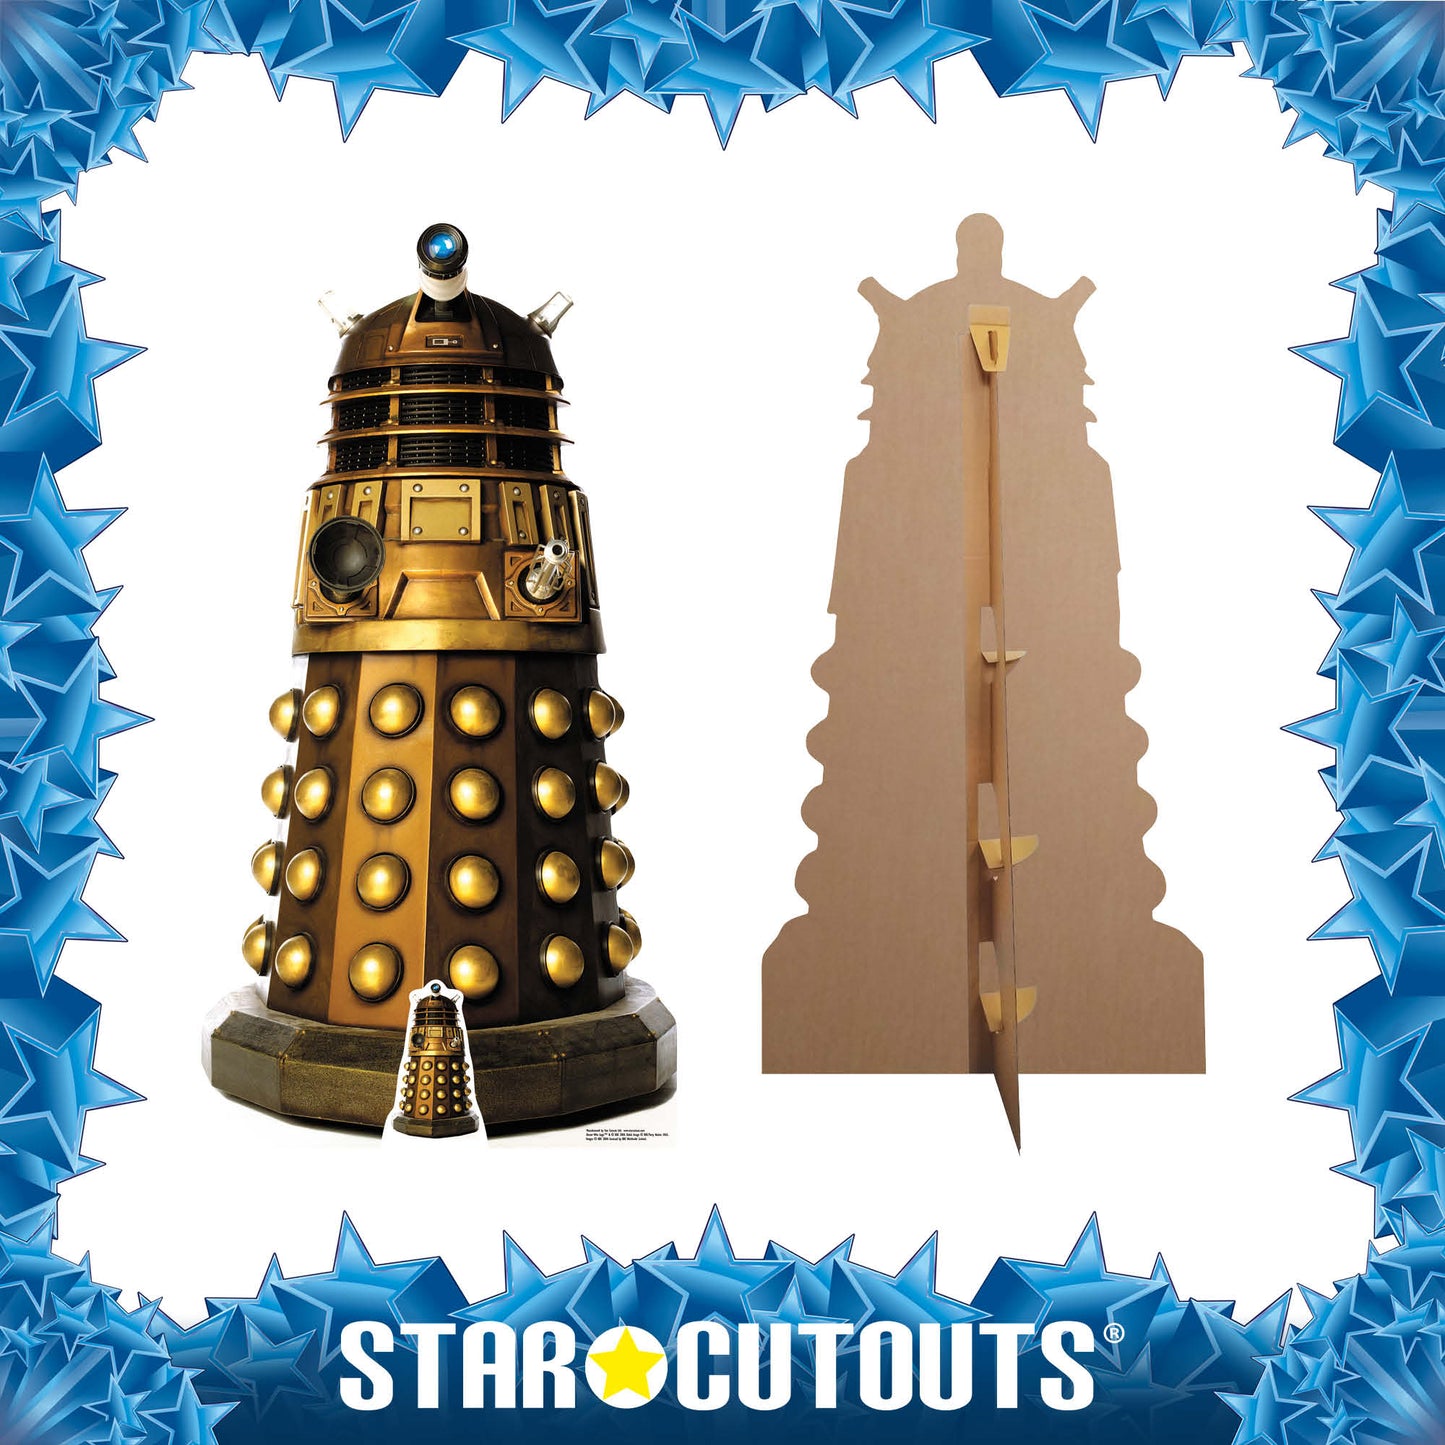 Dalek Caan Cardboard Cut Out Height 173cm - Star Cutouts